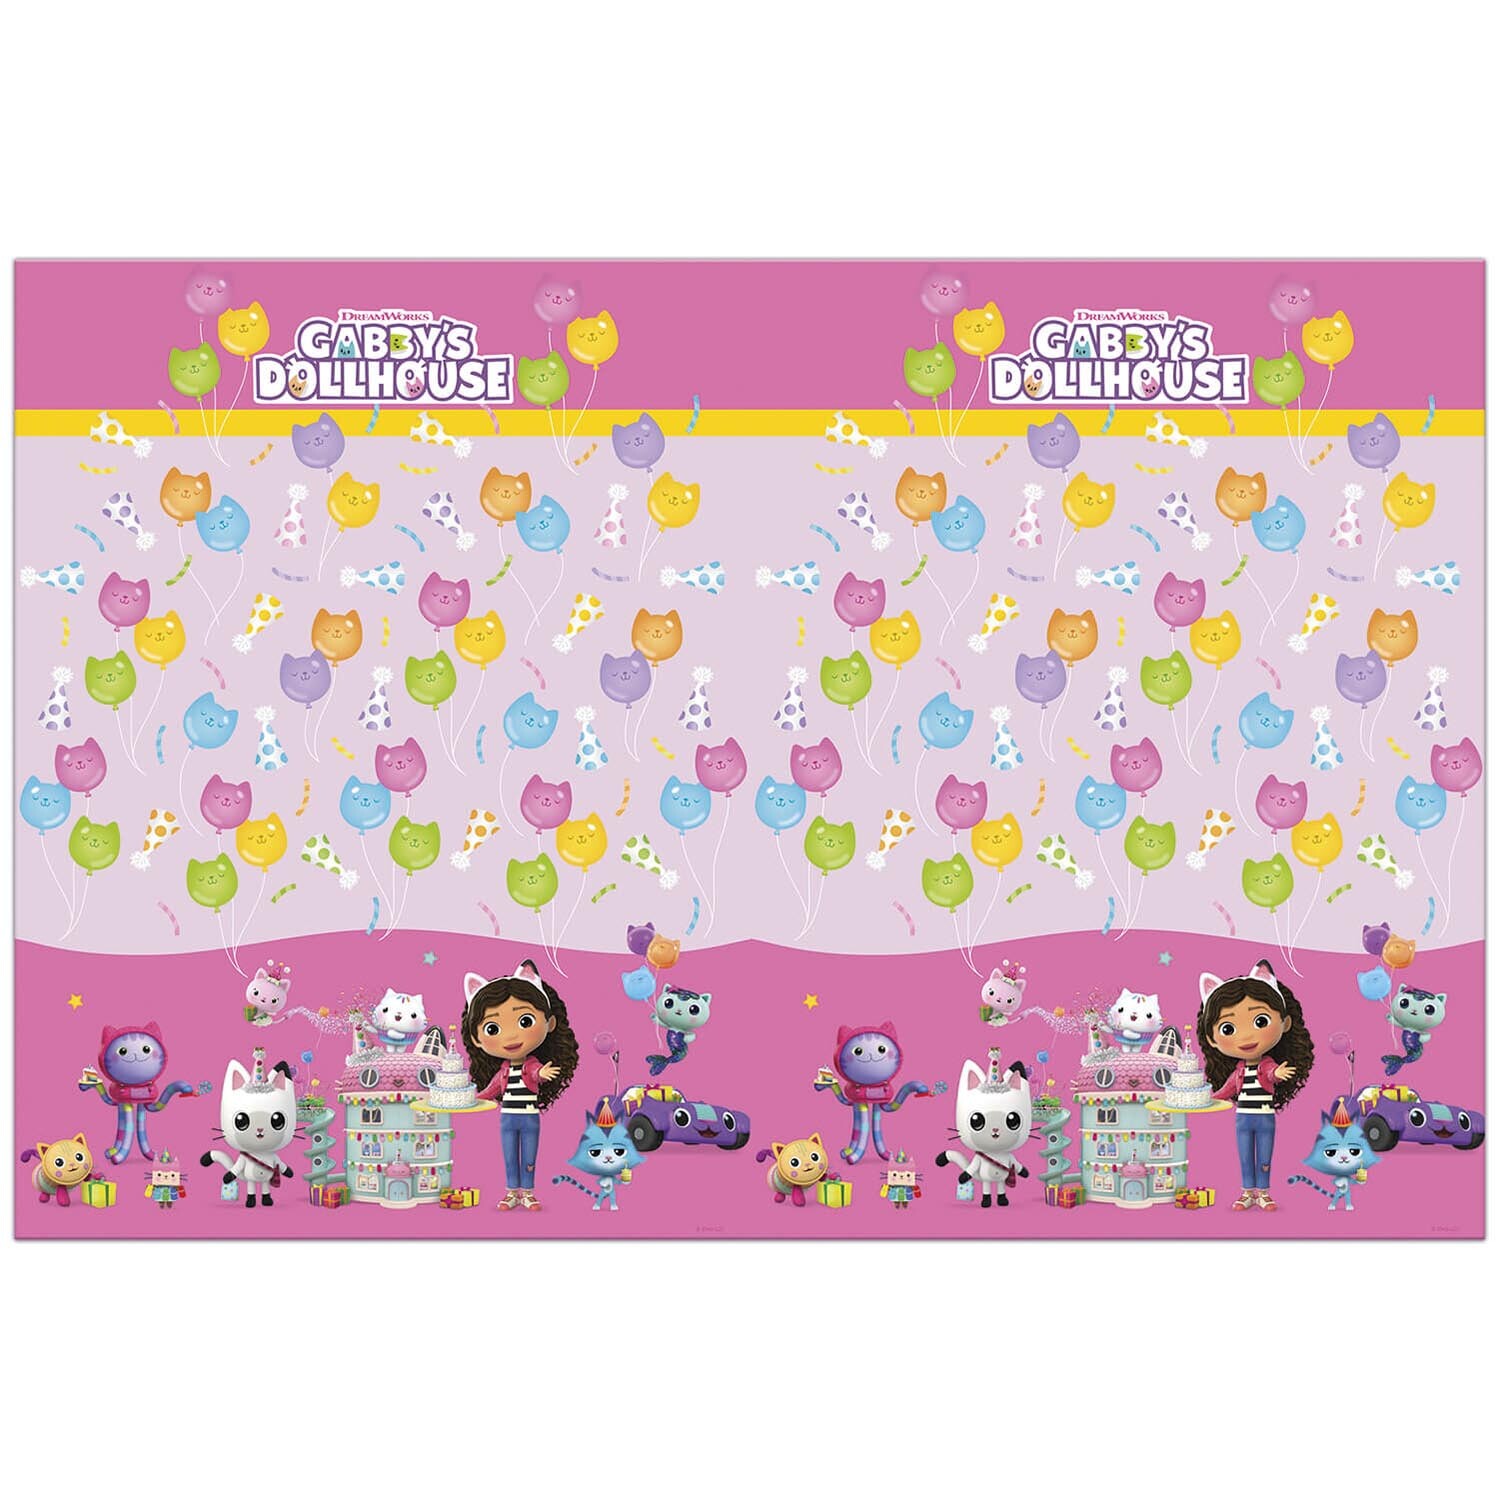 Gabby's Dollhouse Pink Plastic Tablecloth 180 x 120cm Image